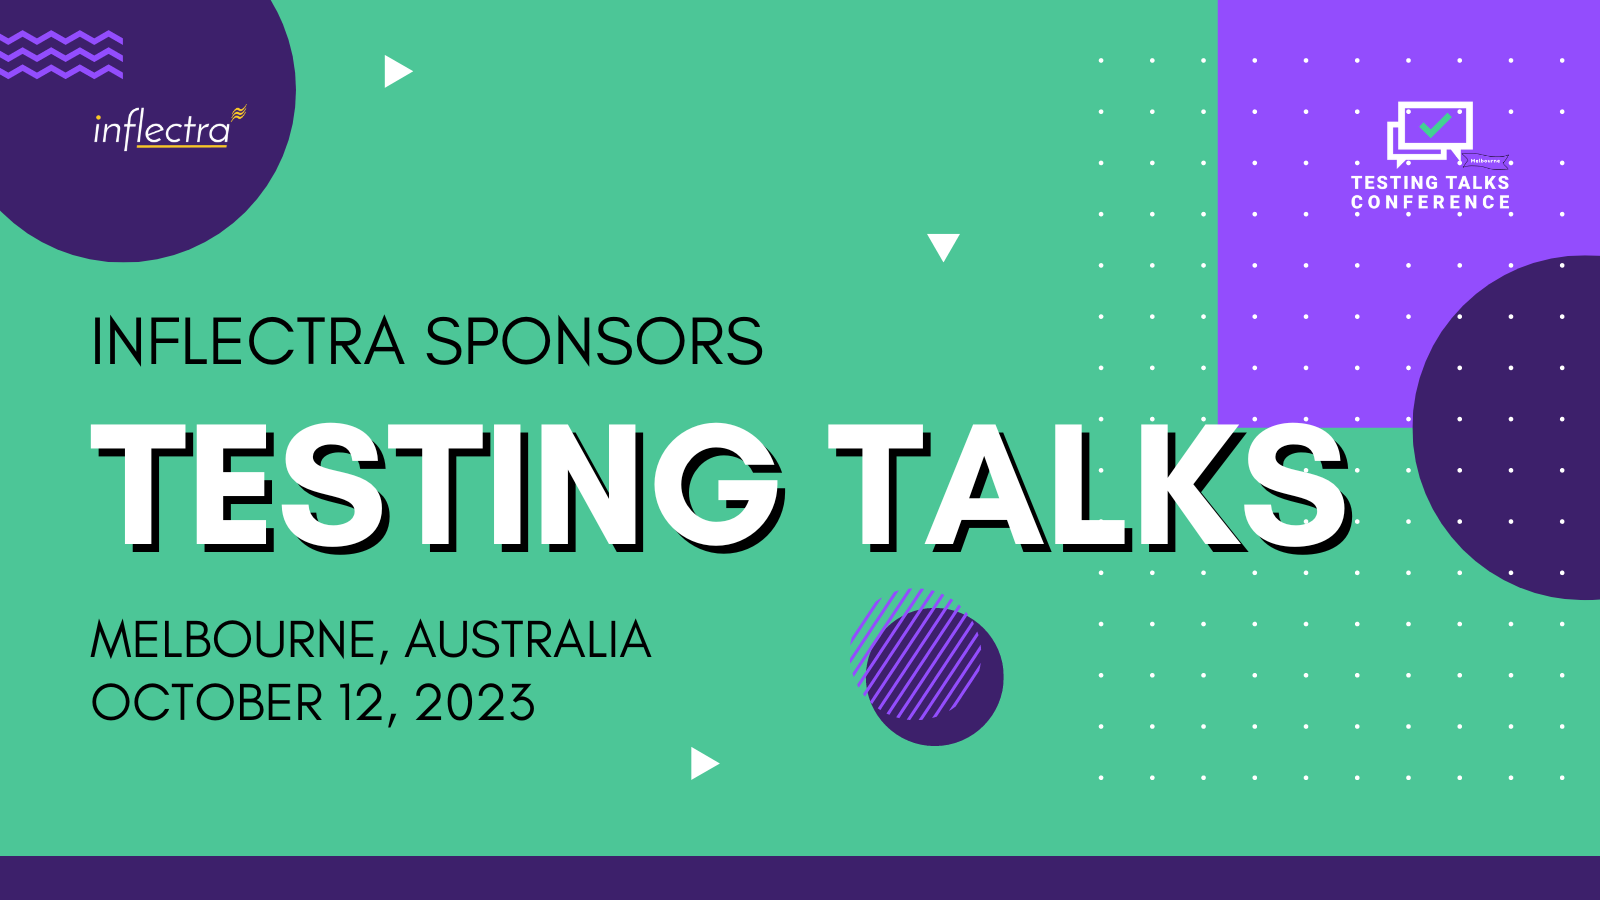 inflectra-sponsors-testing-talks-melbourne-australia-in-october-image